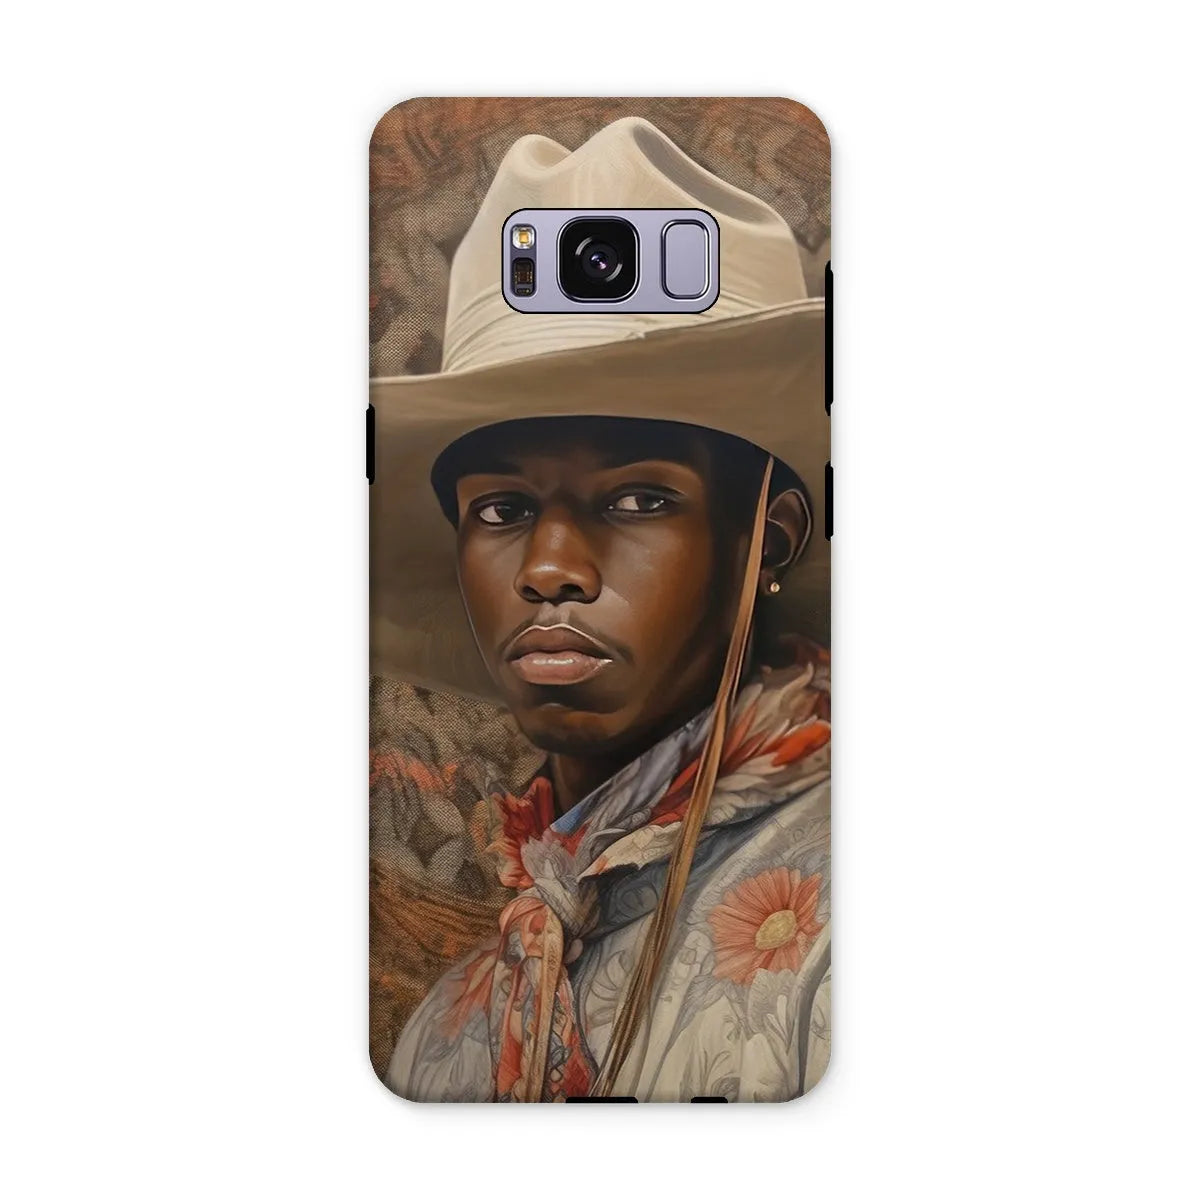 Titus The Gay Cowboy - Dandy Gay Men Art Phone Case - Samsung Galaxy S8 Plus / Matte - Mobile Phone Cases - Aesthetic